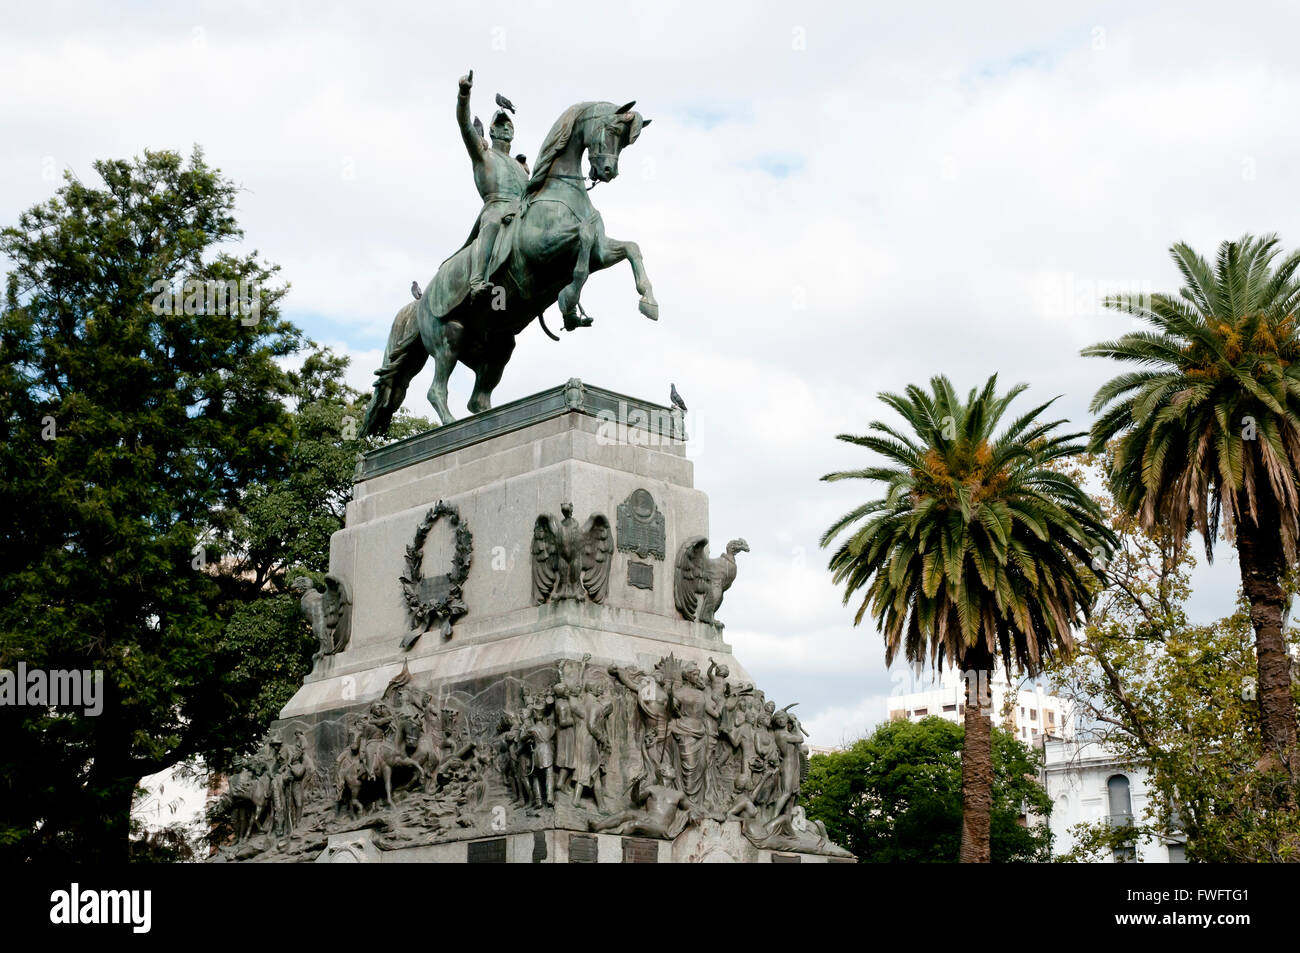 Statue of General Jose De San Martin - Cordoba - Argentina Stock Photo